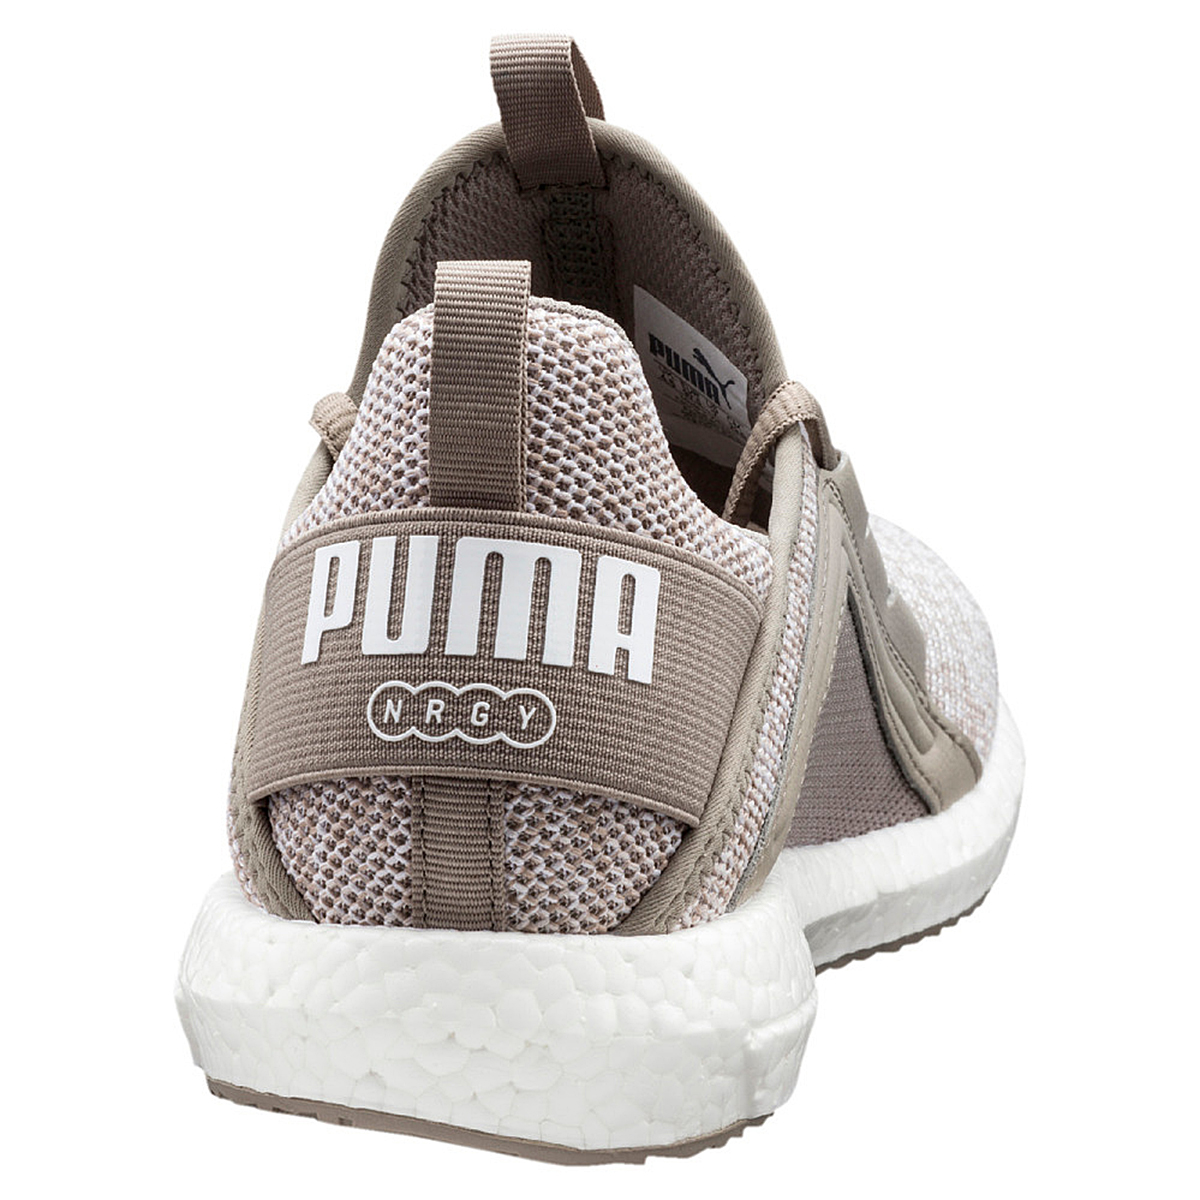 Puma Damen Mega Nrgy Knit Sneaker women 190373 04